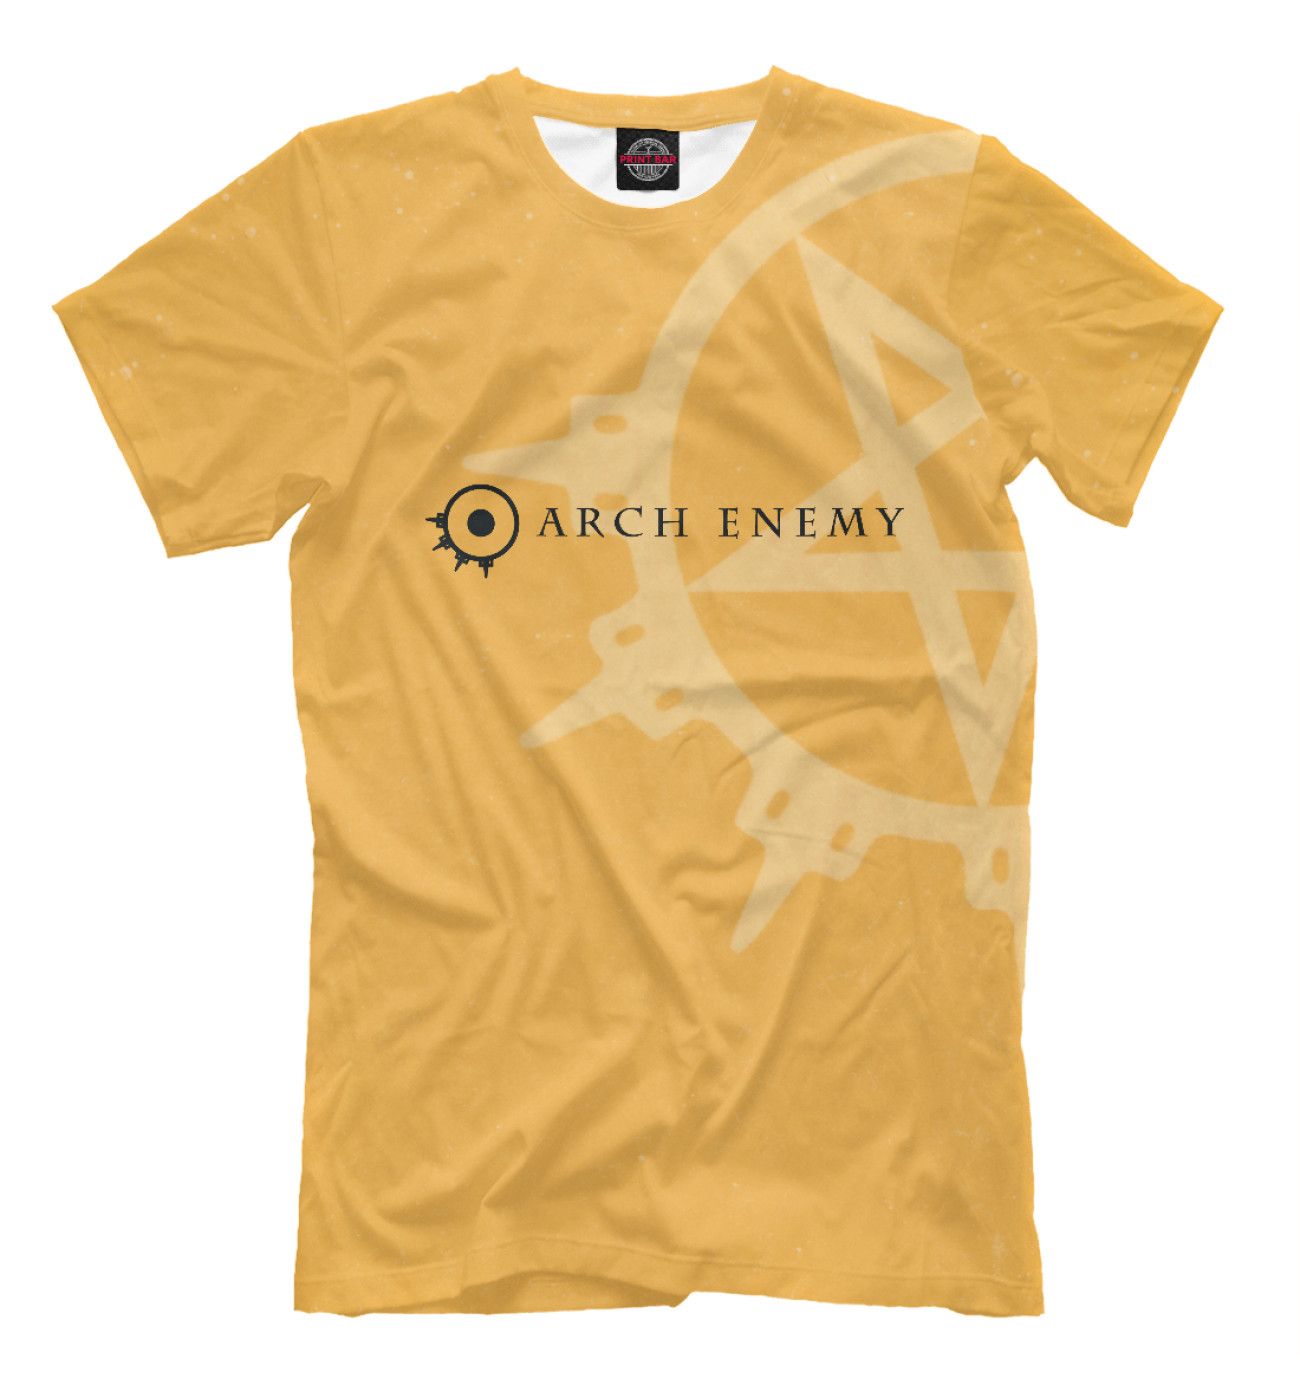 Мужская Футболка Arch Enemy, артикул: AEN-247399-fut-2